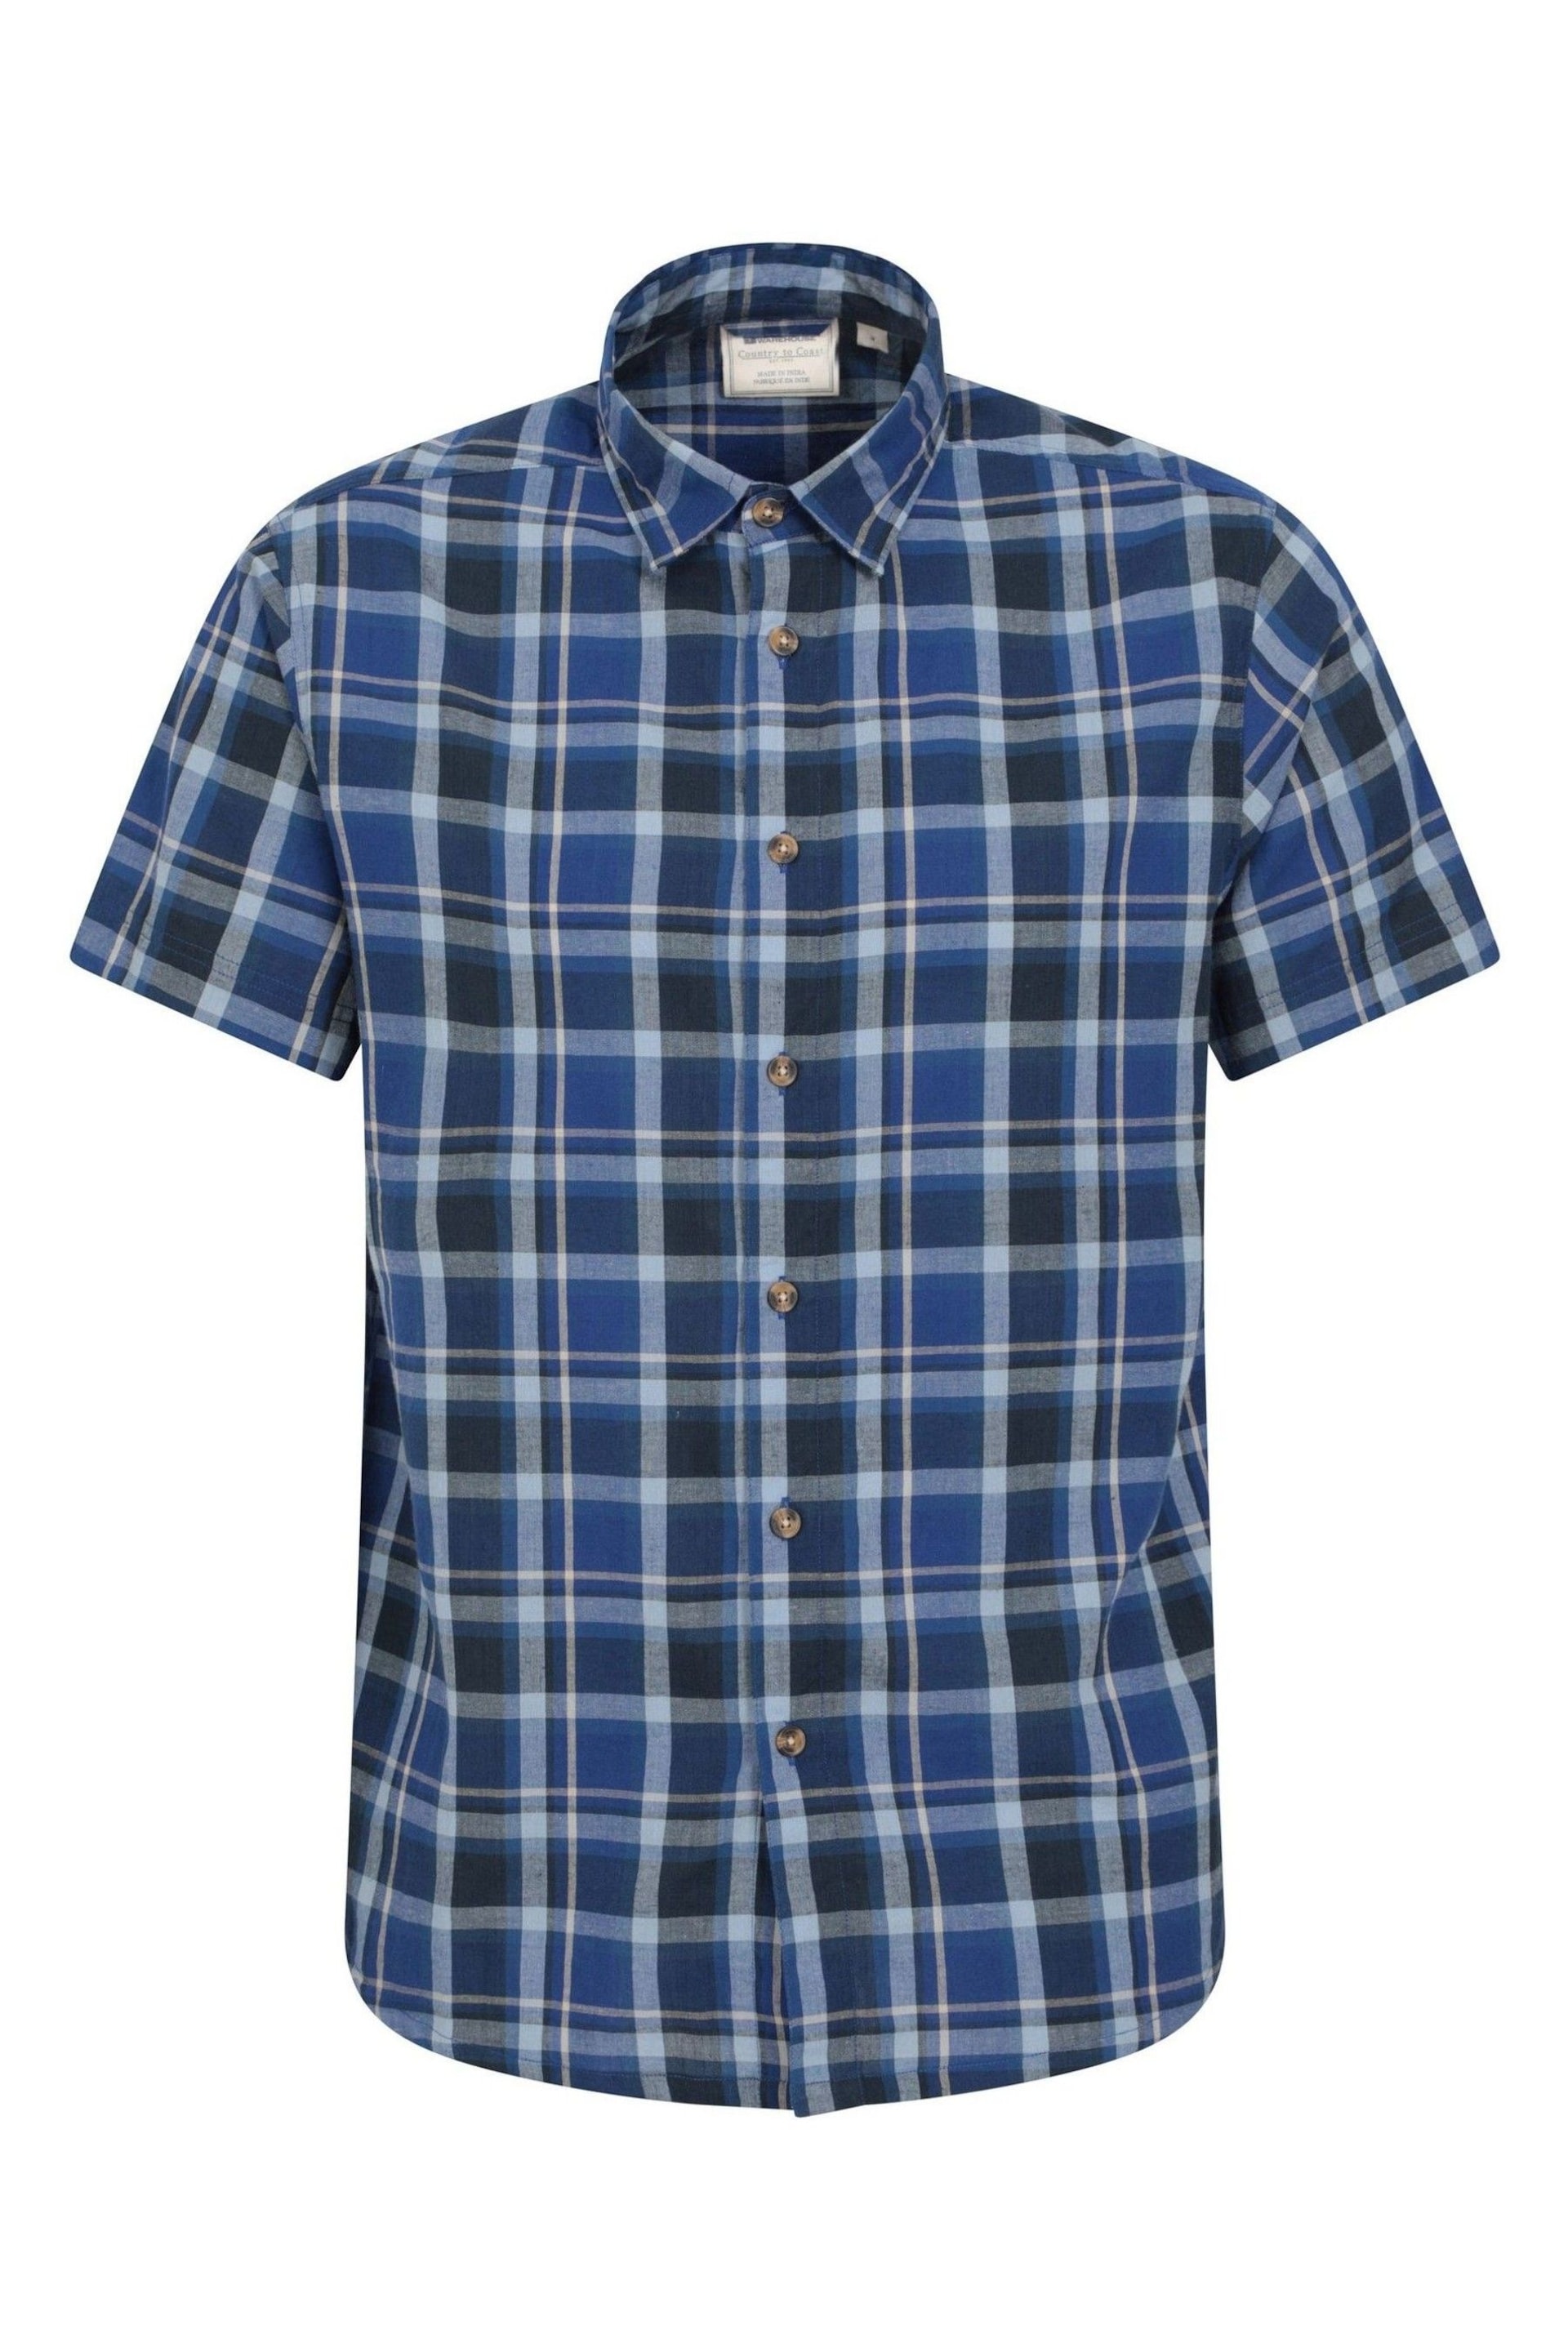 Mountain Warehouse Blue Weekender Mens Cotton Shirt - Image 1 of 5